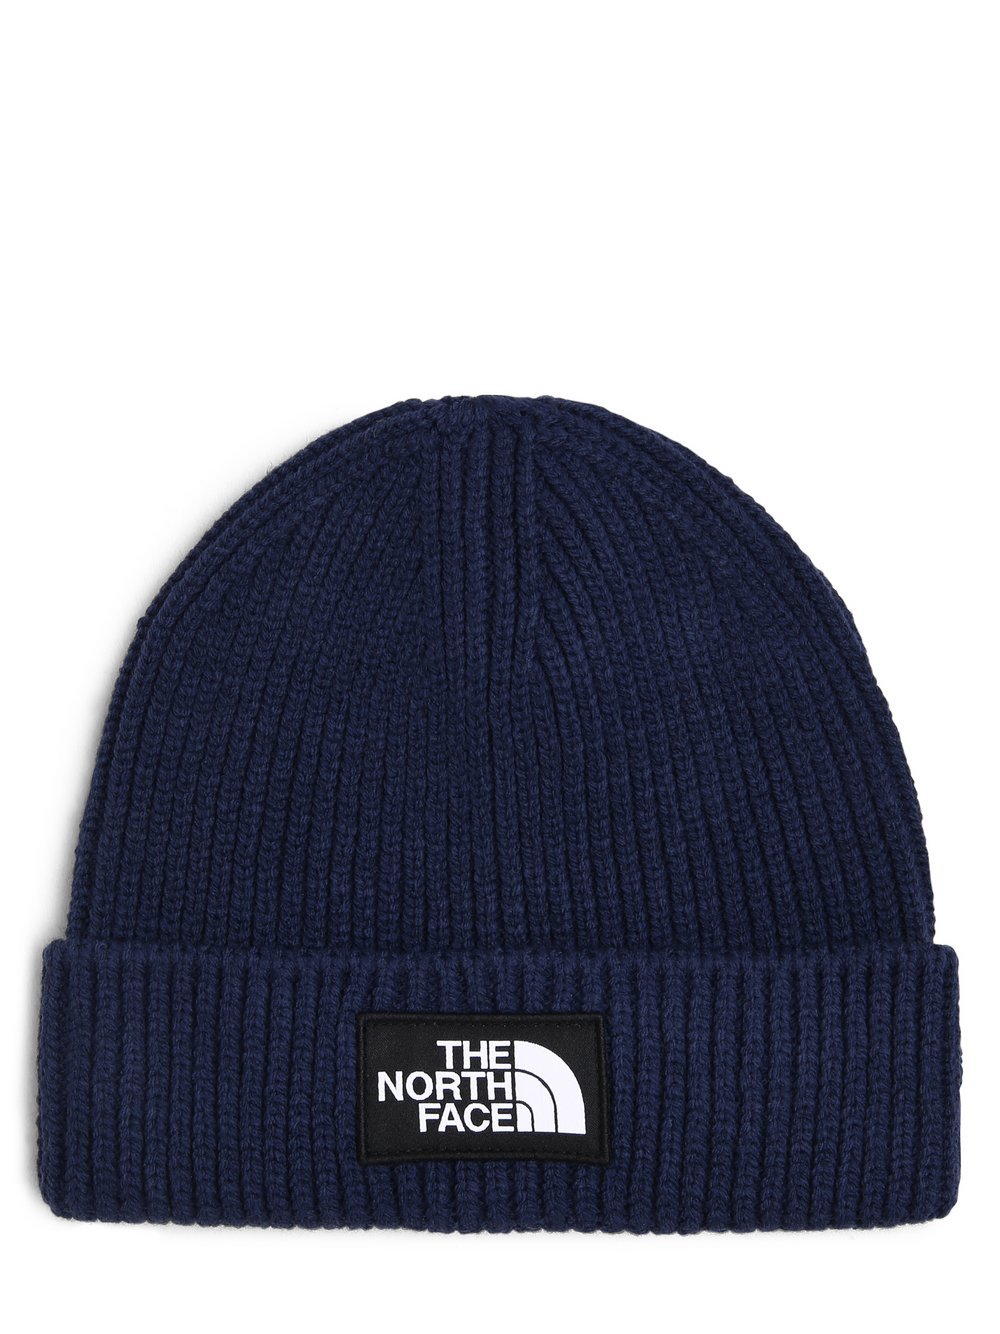 The North Face - Czapka męska, niebieski